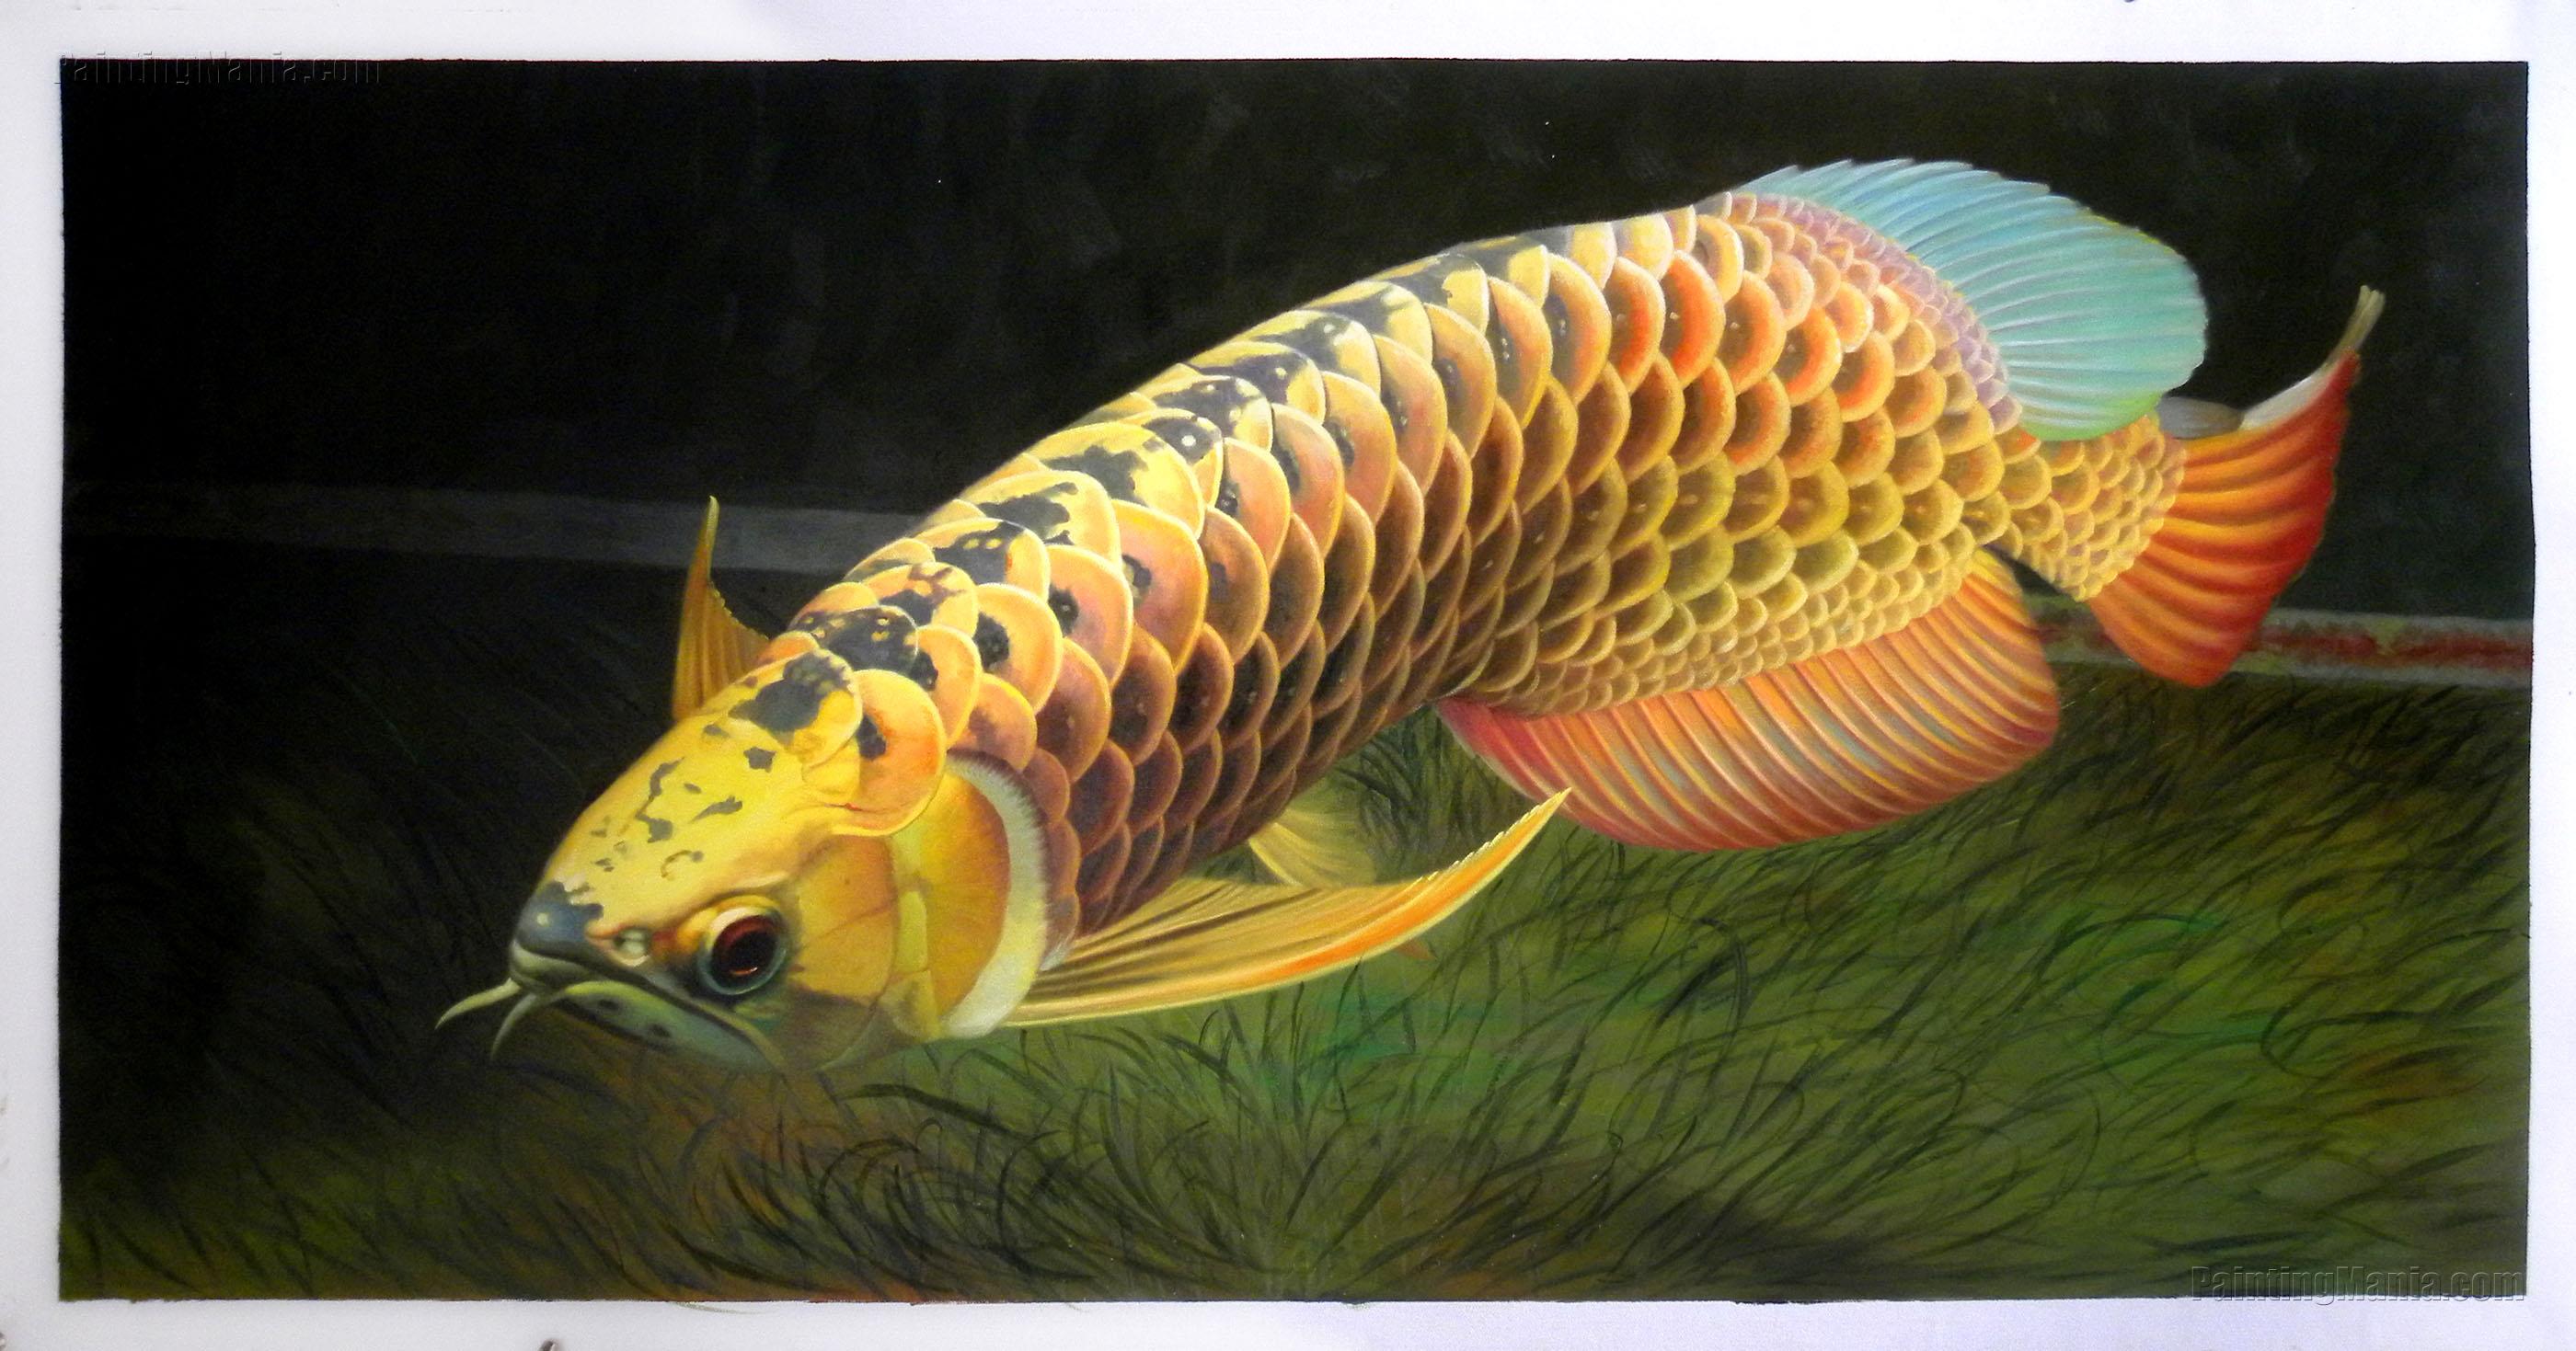 Scleropages Formosus,Asian Arowana, Asian Bonytongue, Golden Arowana, Golden Dragon Fish